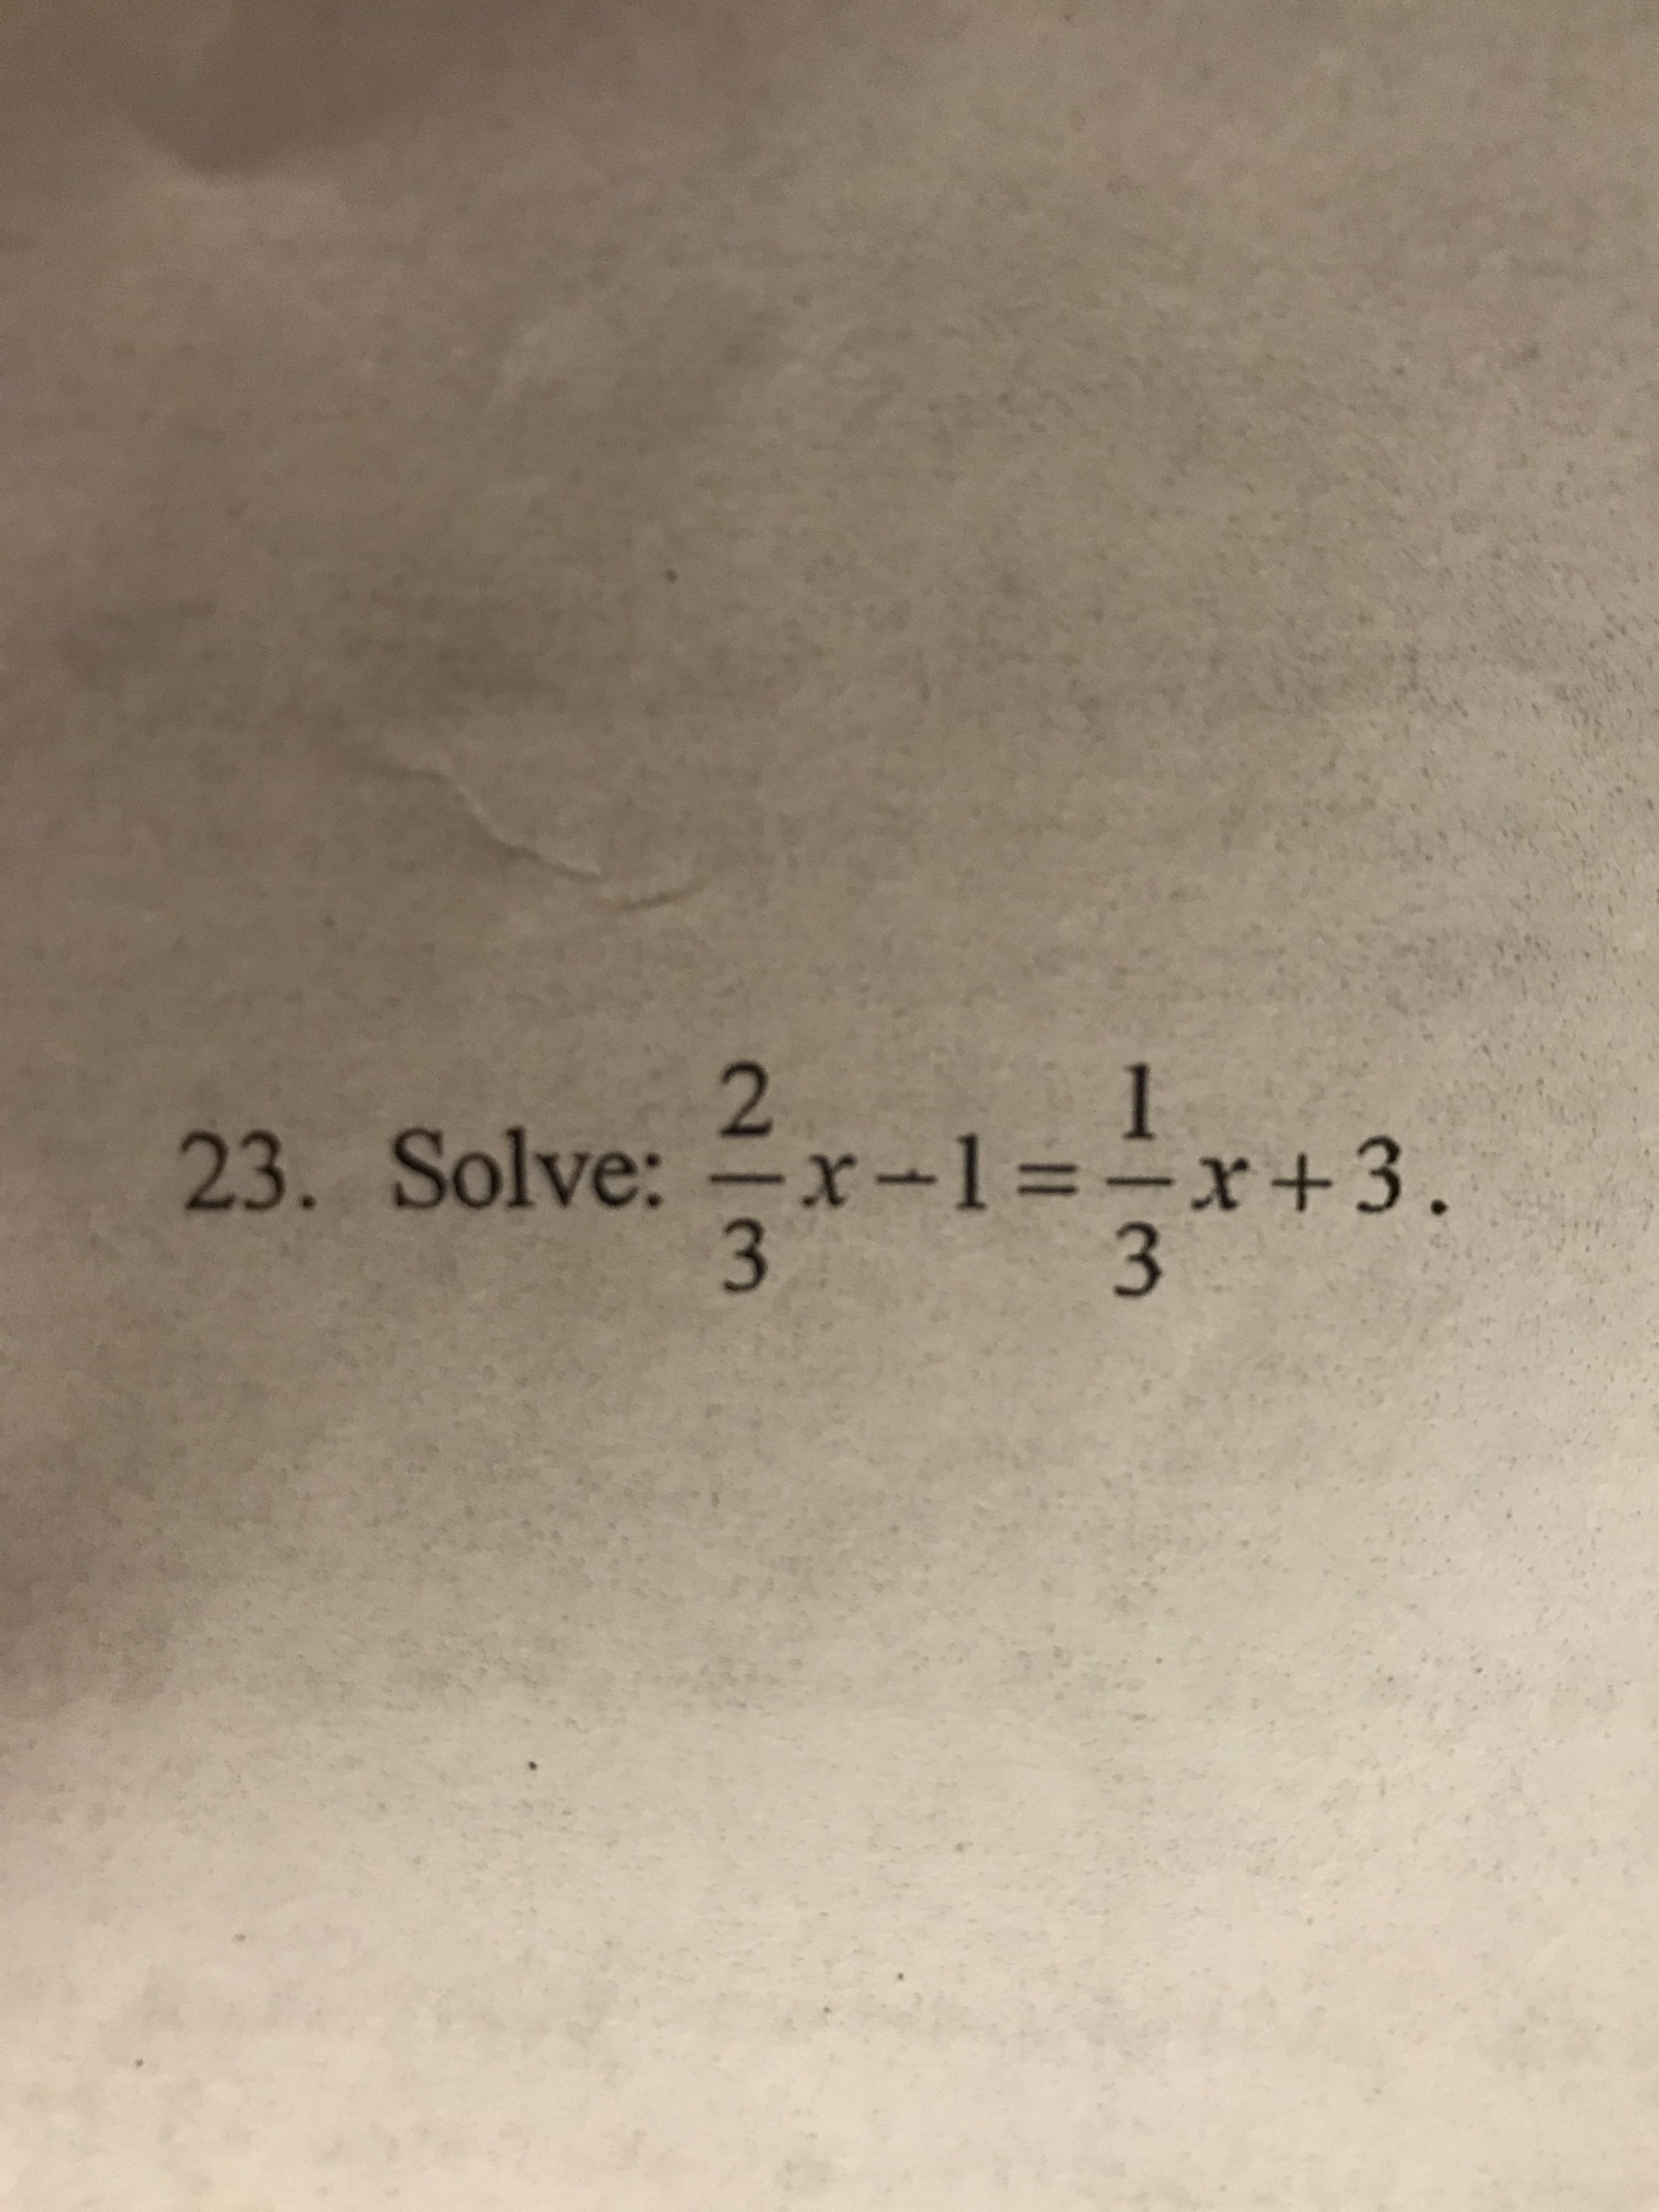 2
23.
Solve:-x-1=-x+3
3
